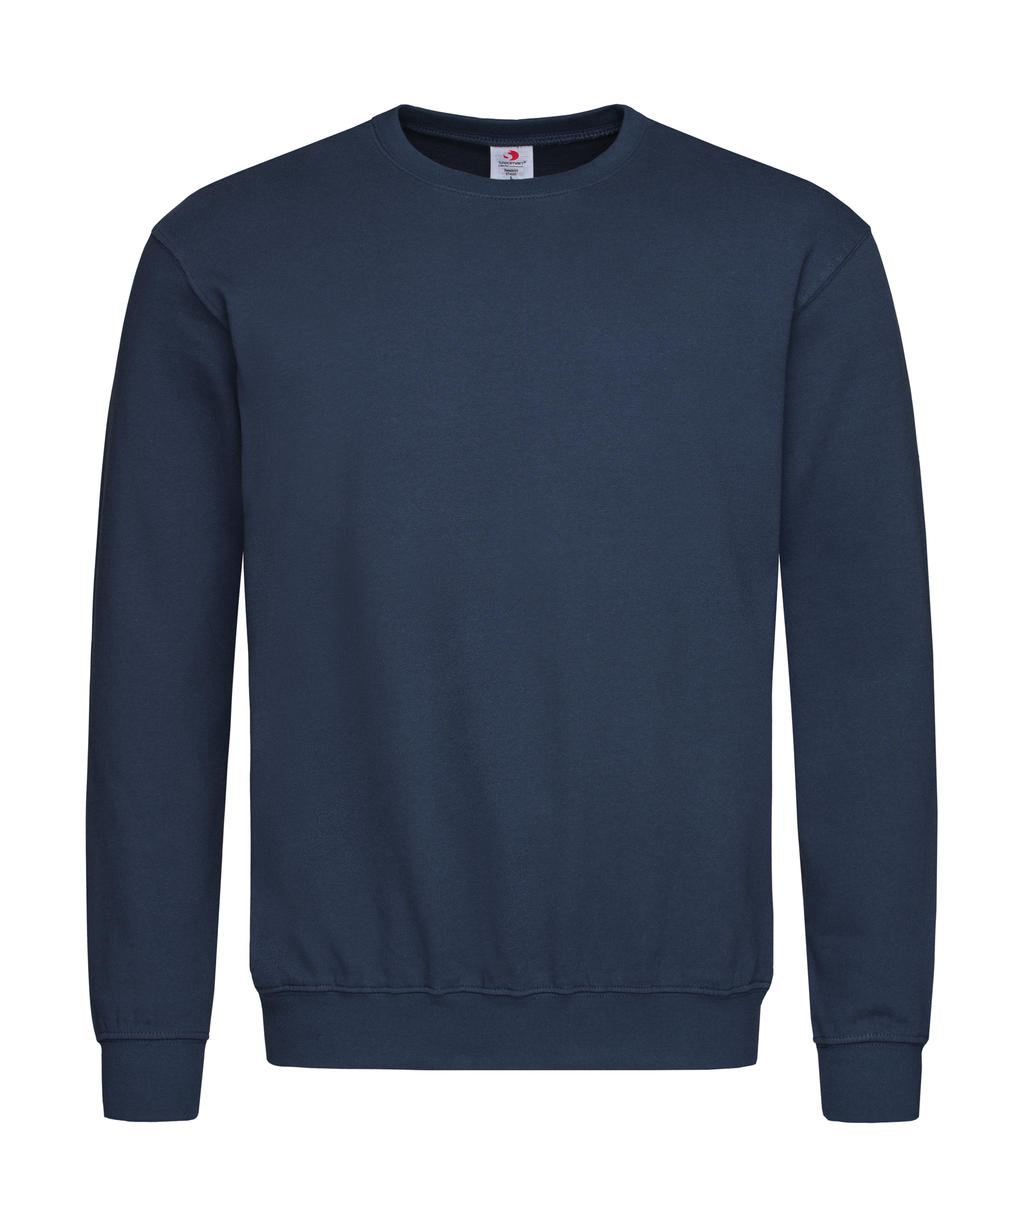  Unisex Sweatshirt Classic in Farbe Navy